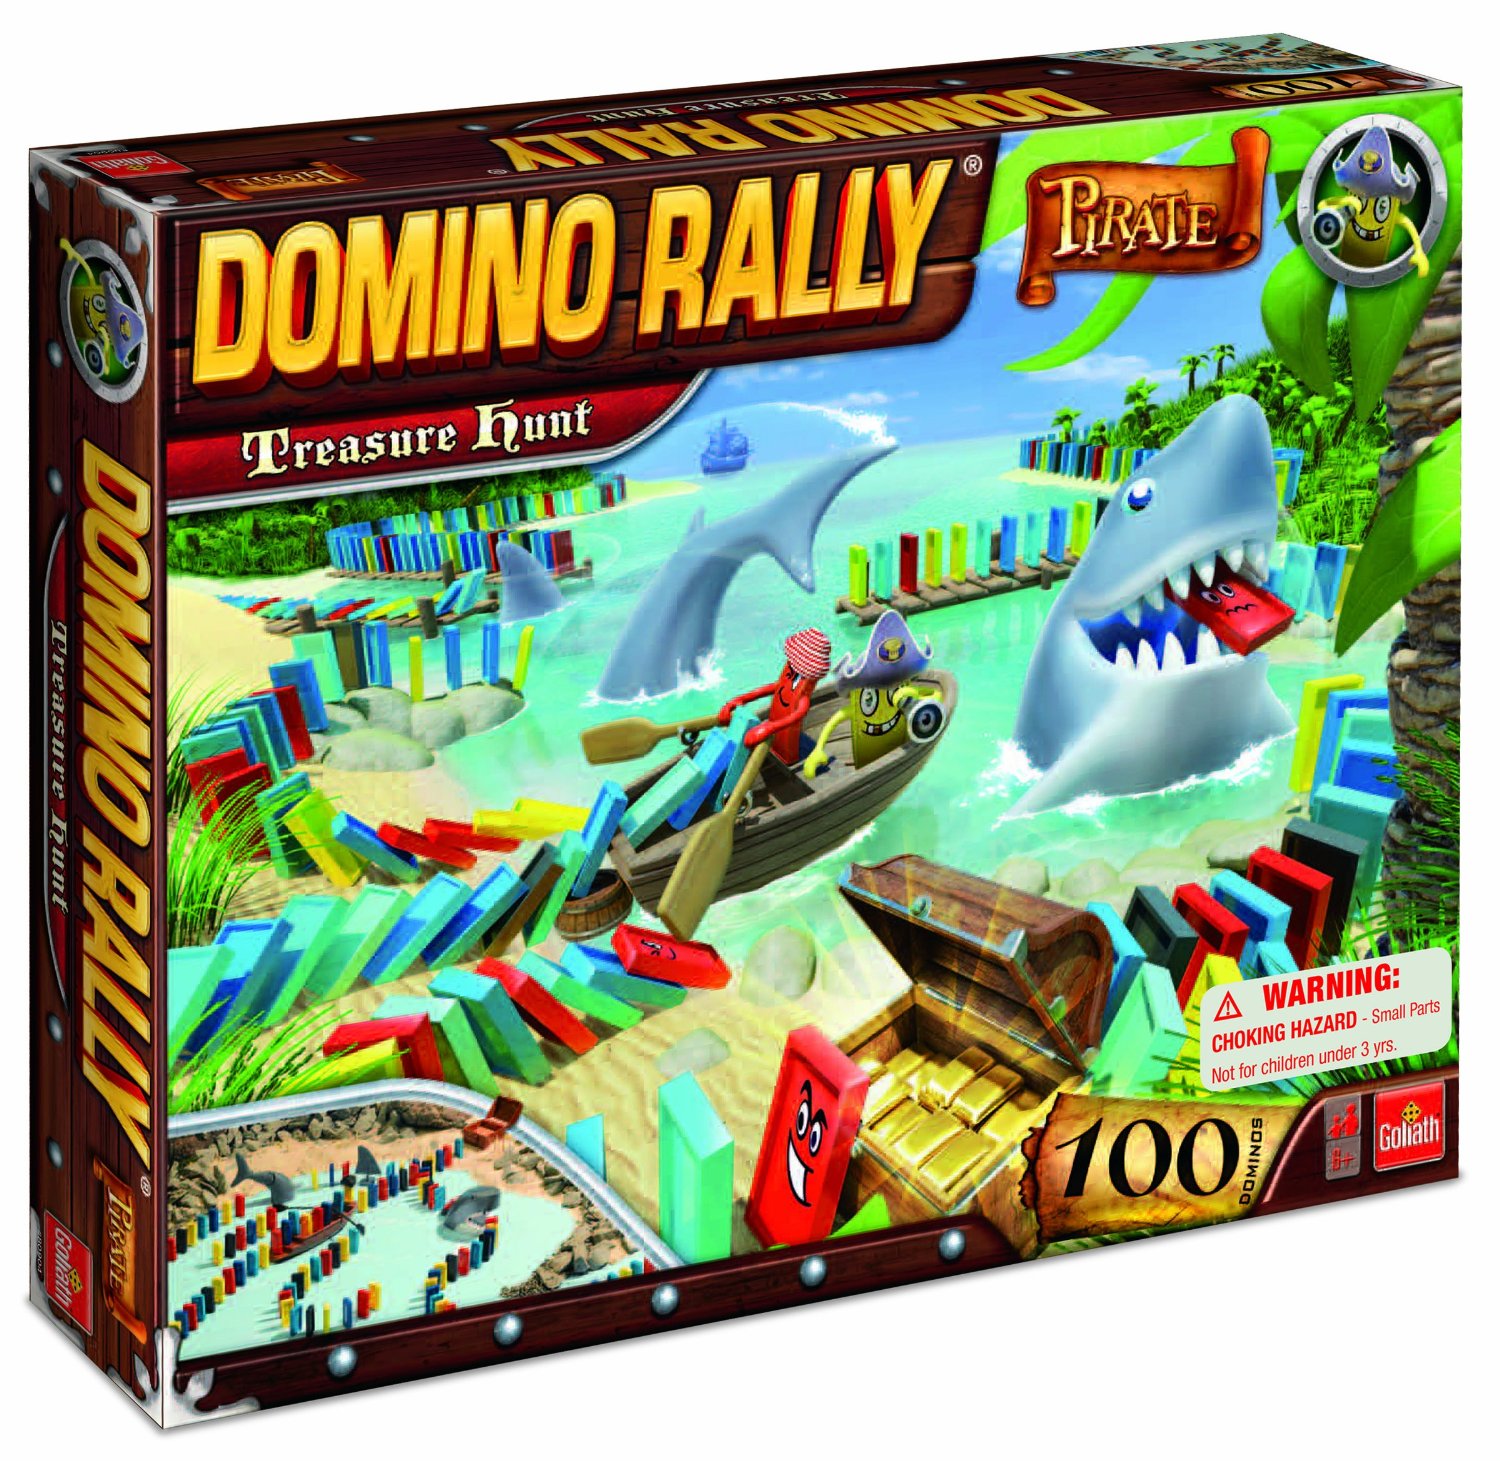 Domino Rally Pirate Treasure Hunt